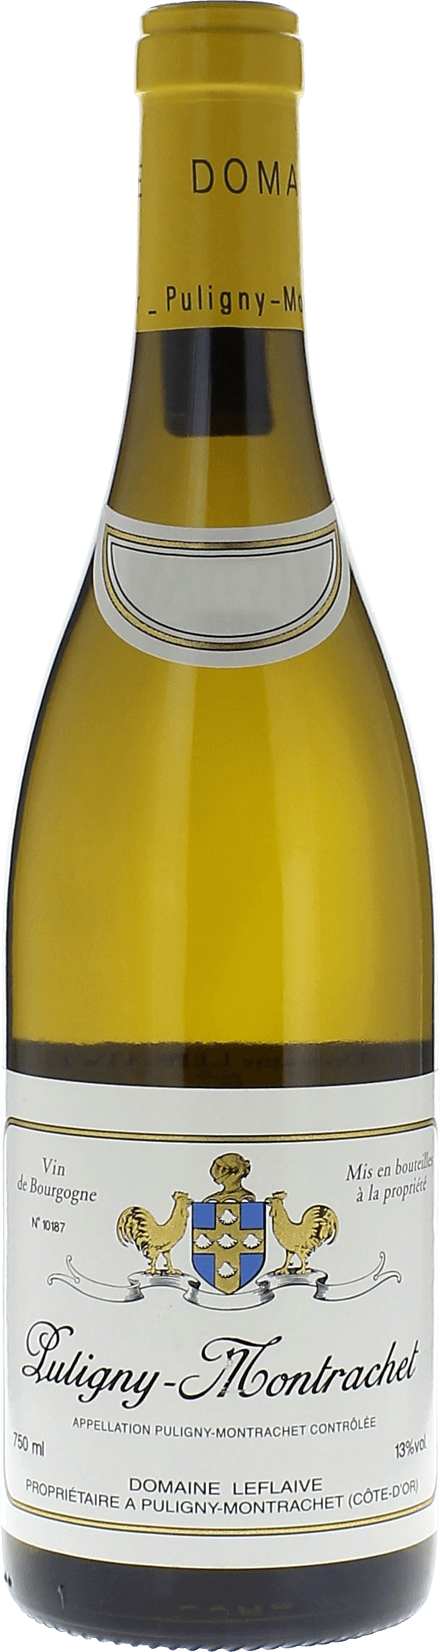 Puligny montrachet 2016 Domaine LEFLAIVE, Bourgogne blanc